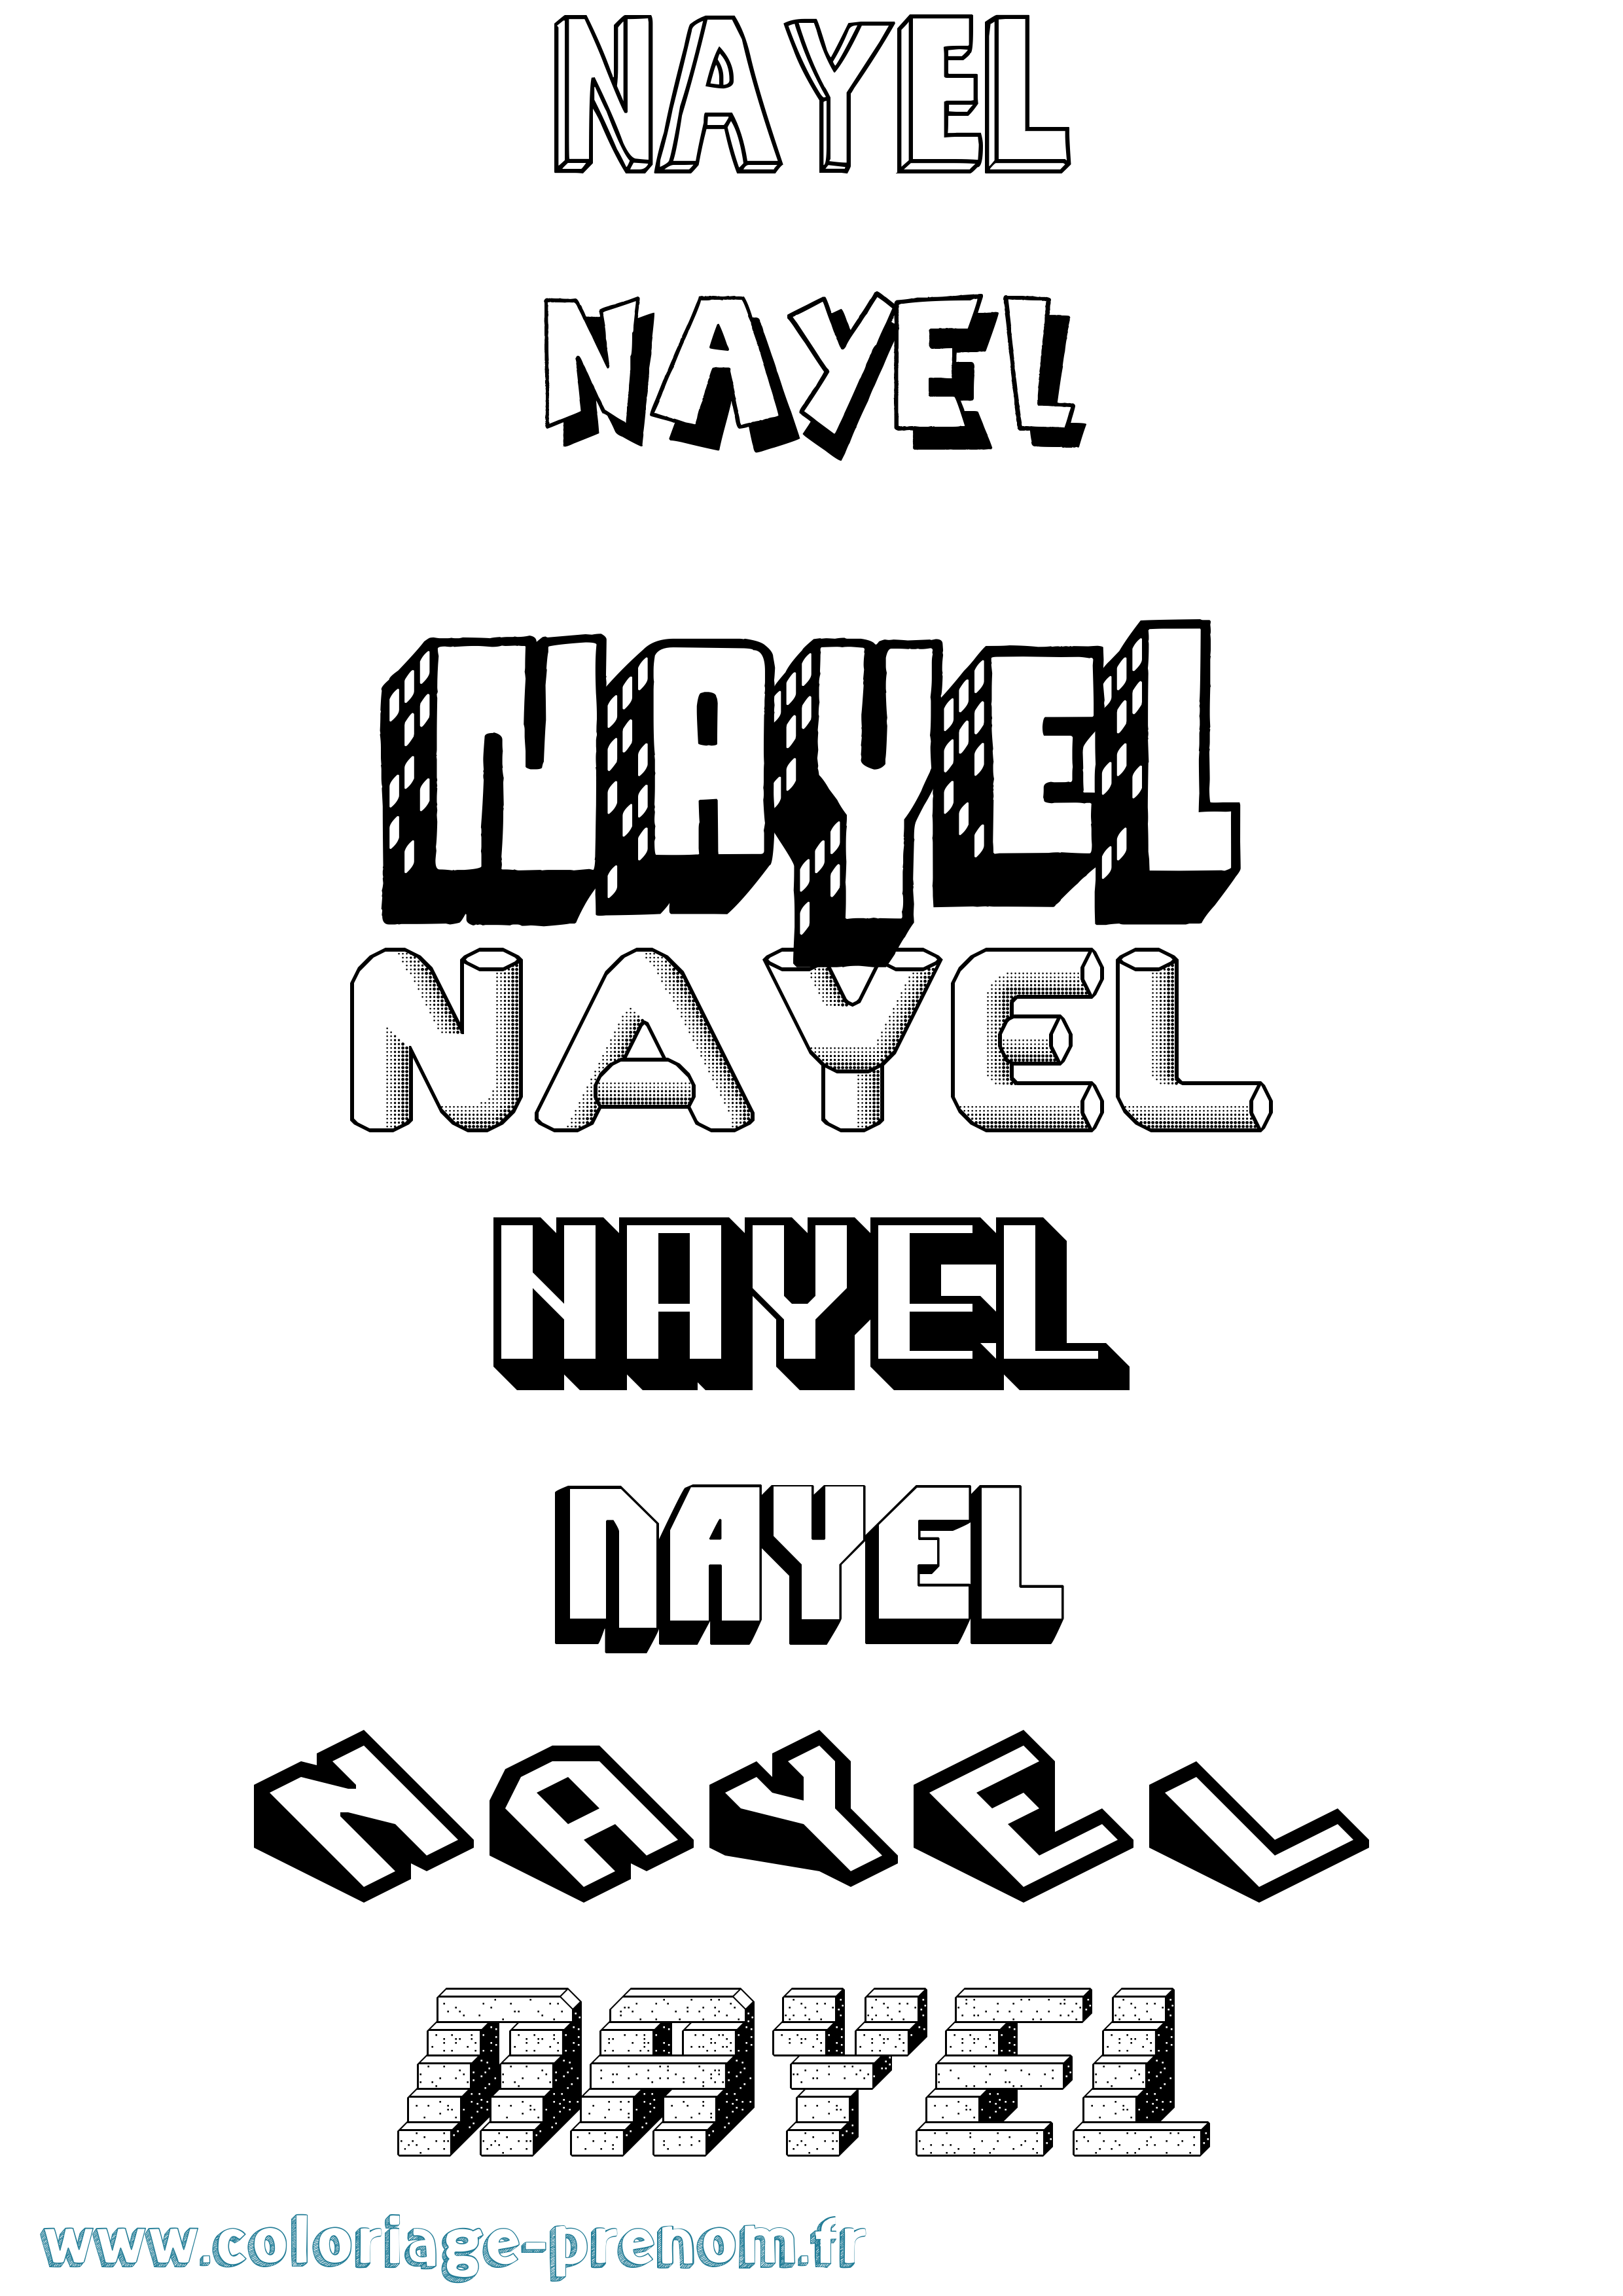 Coloriage prénom Nayel Effet 3D